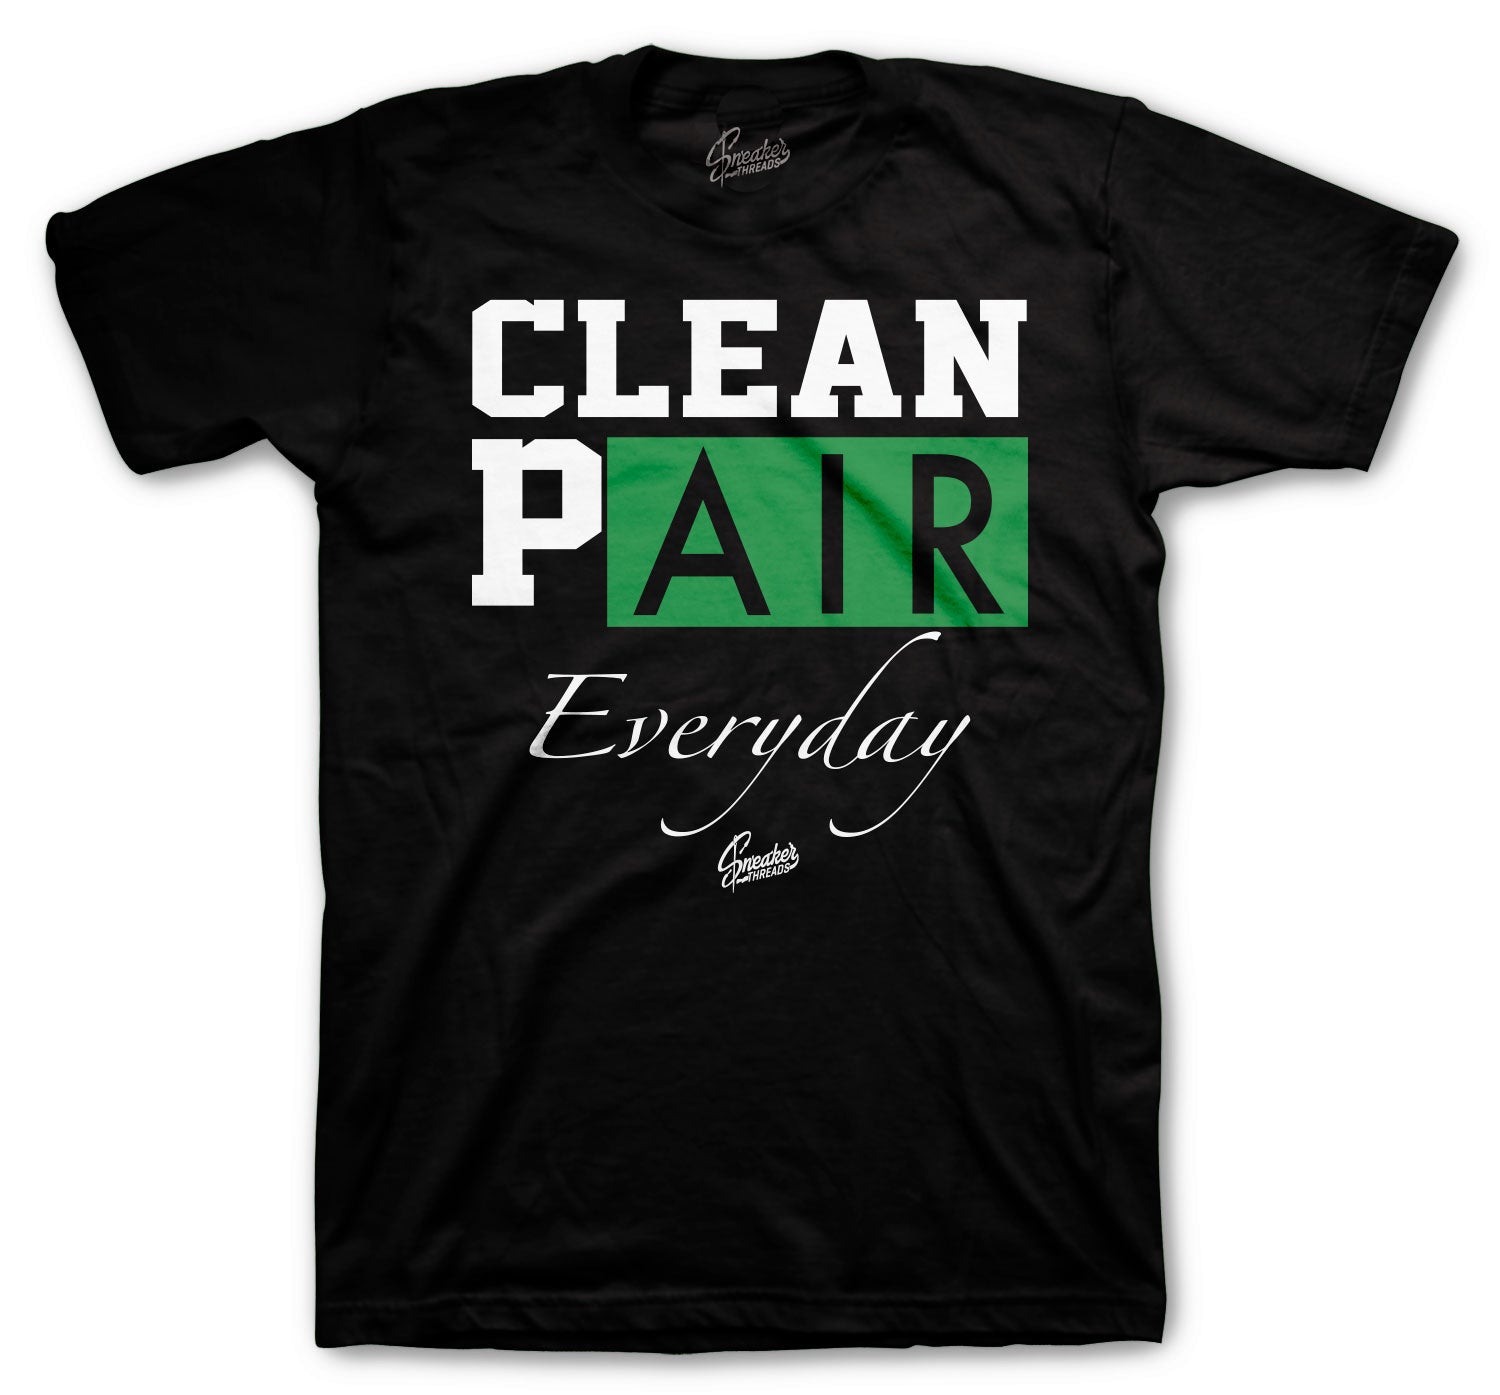 Retro 3 Pine Green Shirt - Everyday - Black